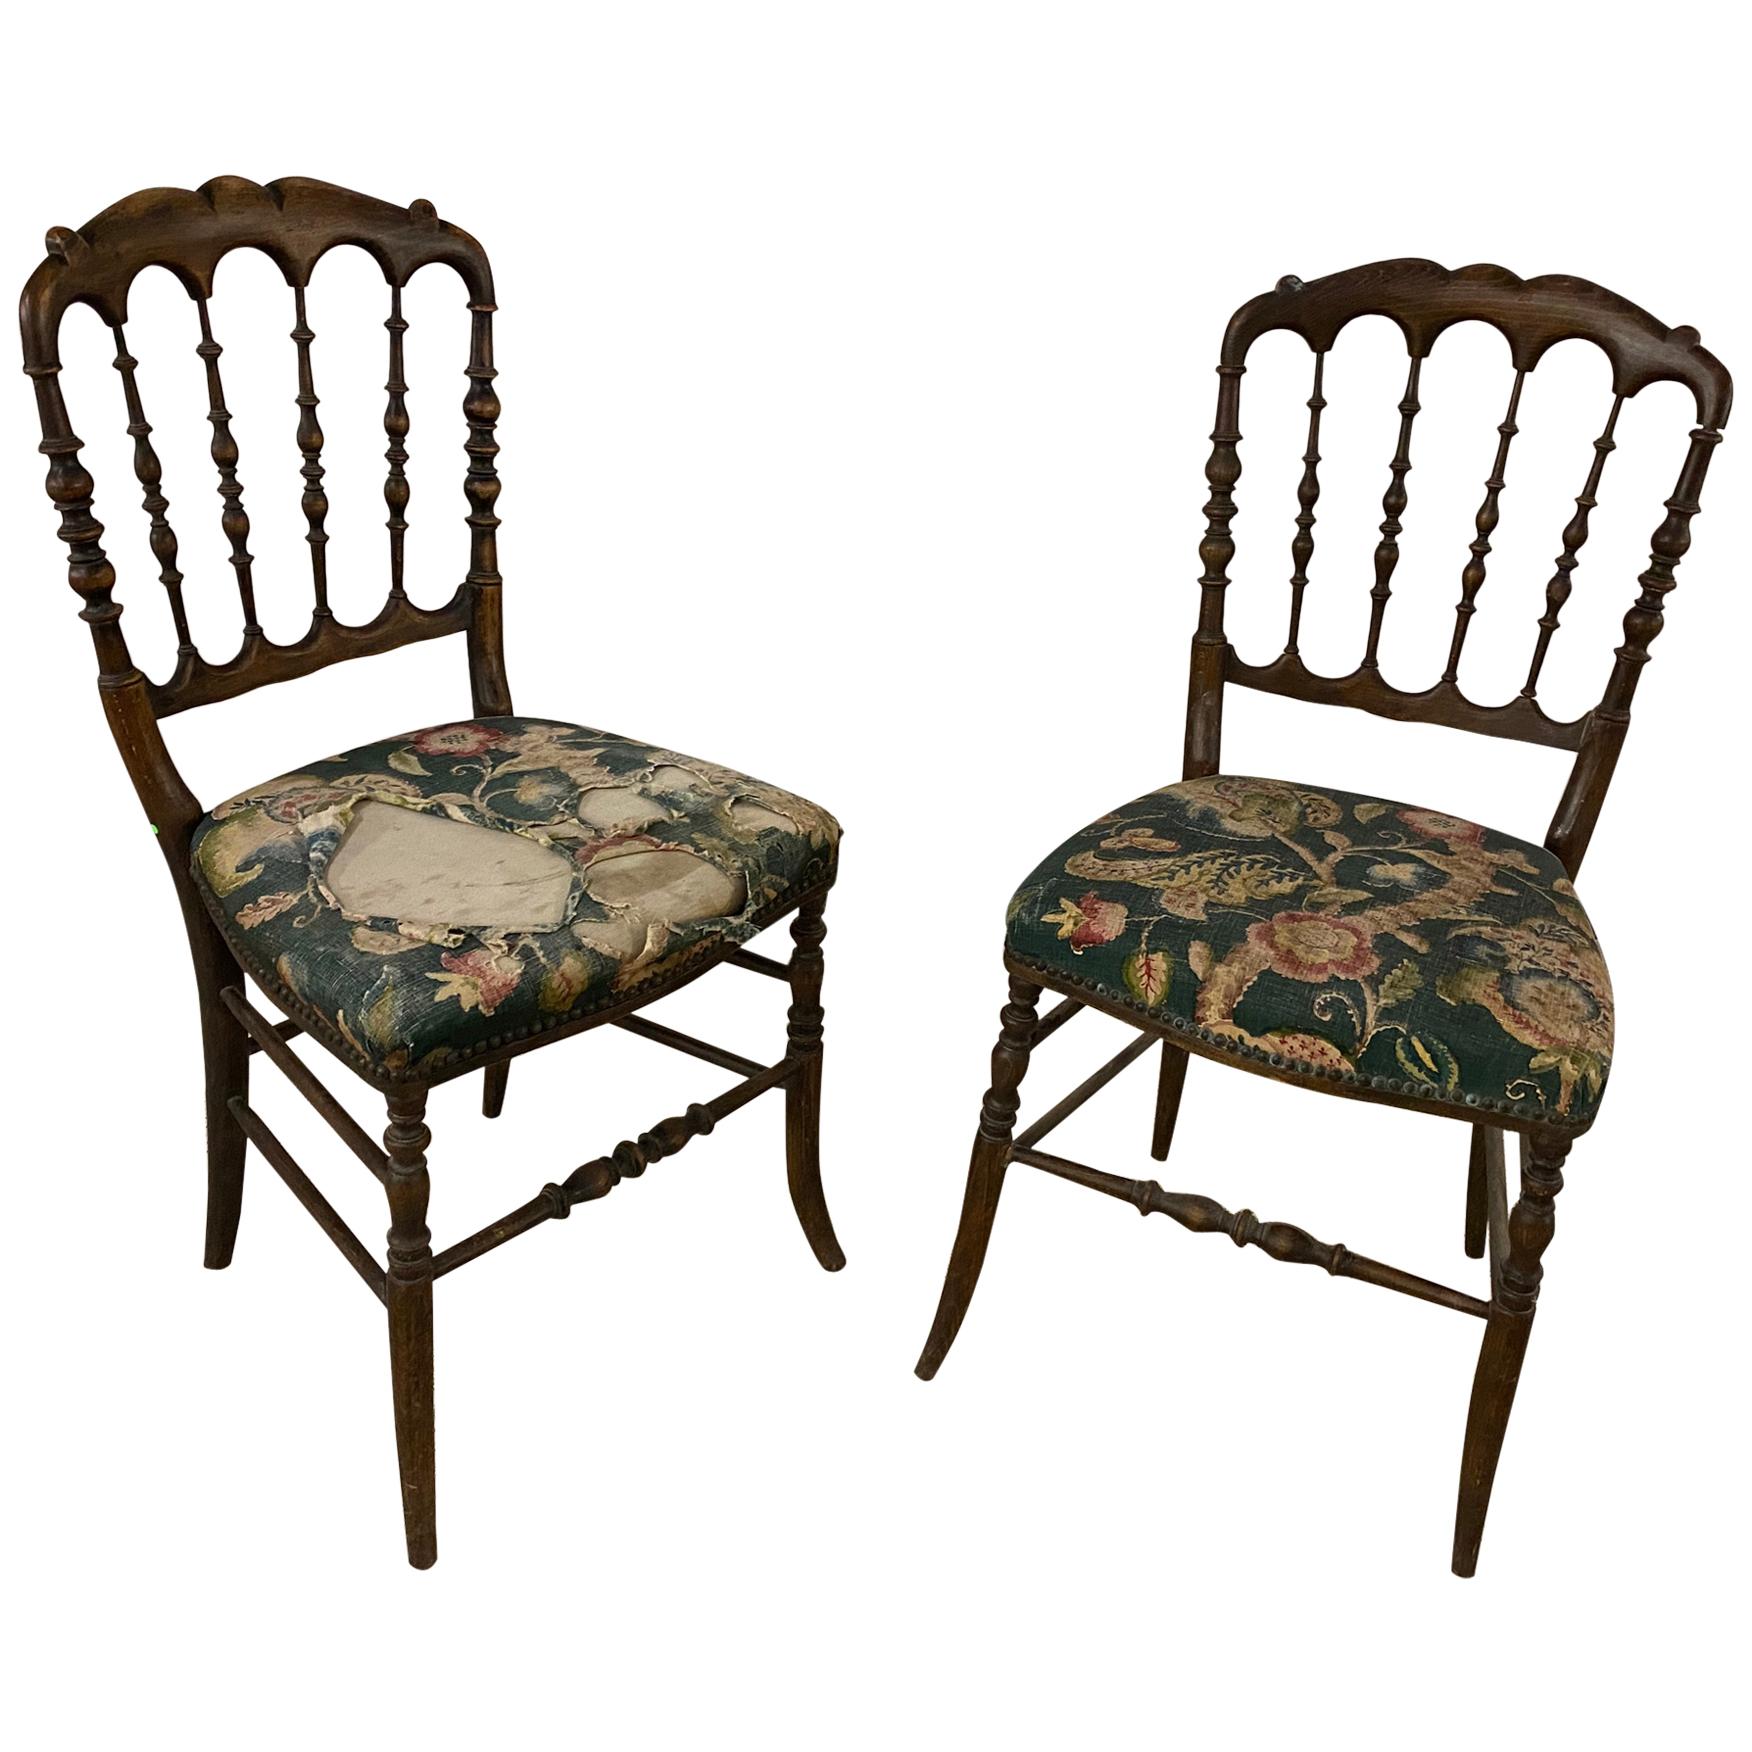 2 Original Chiarivari Napoleon III Ebonized Chairs, France, 1850s For Sale